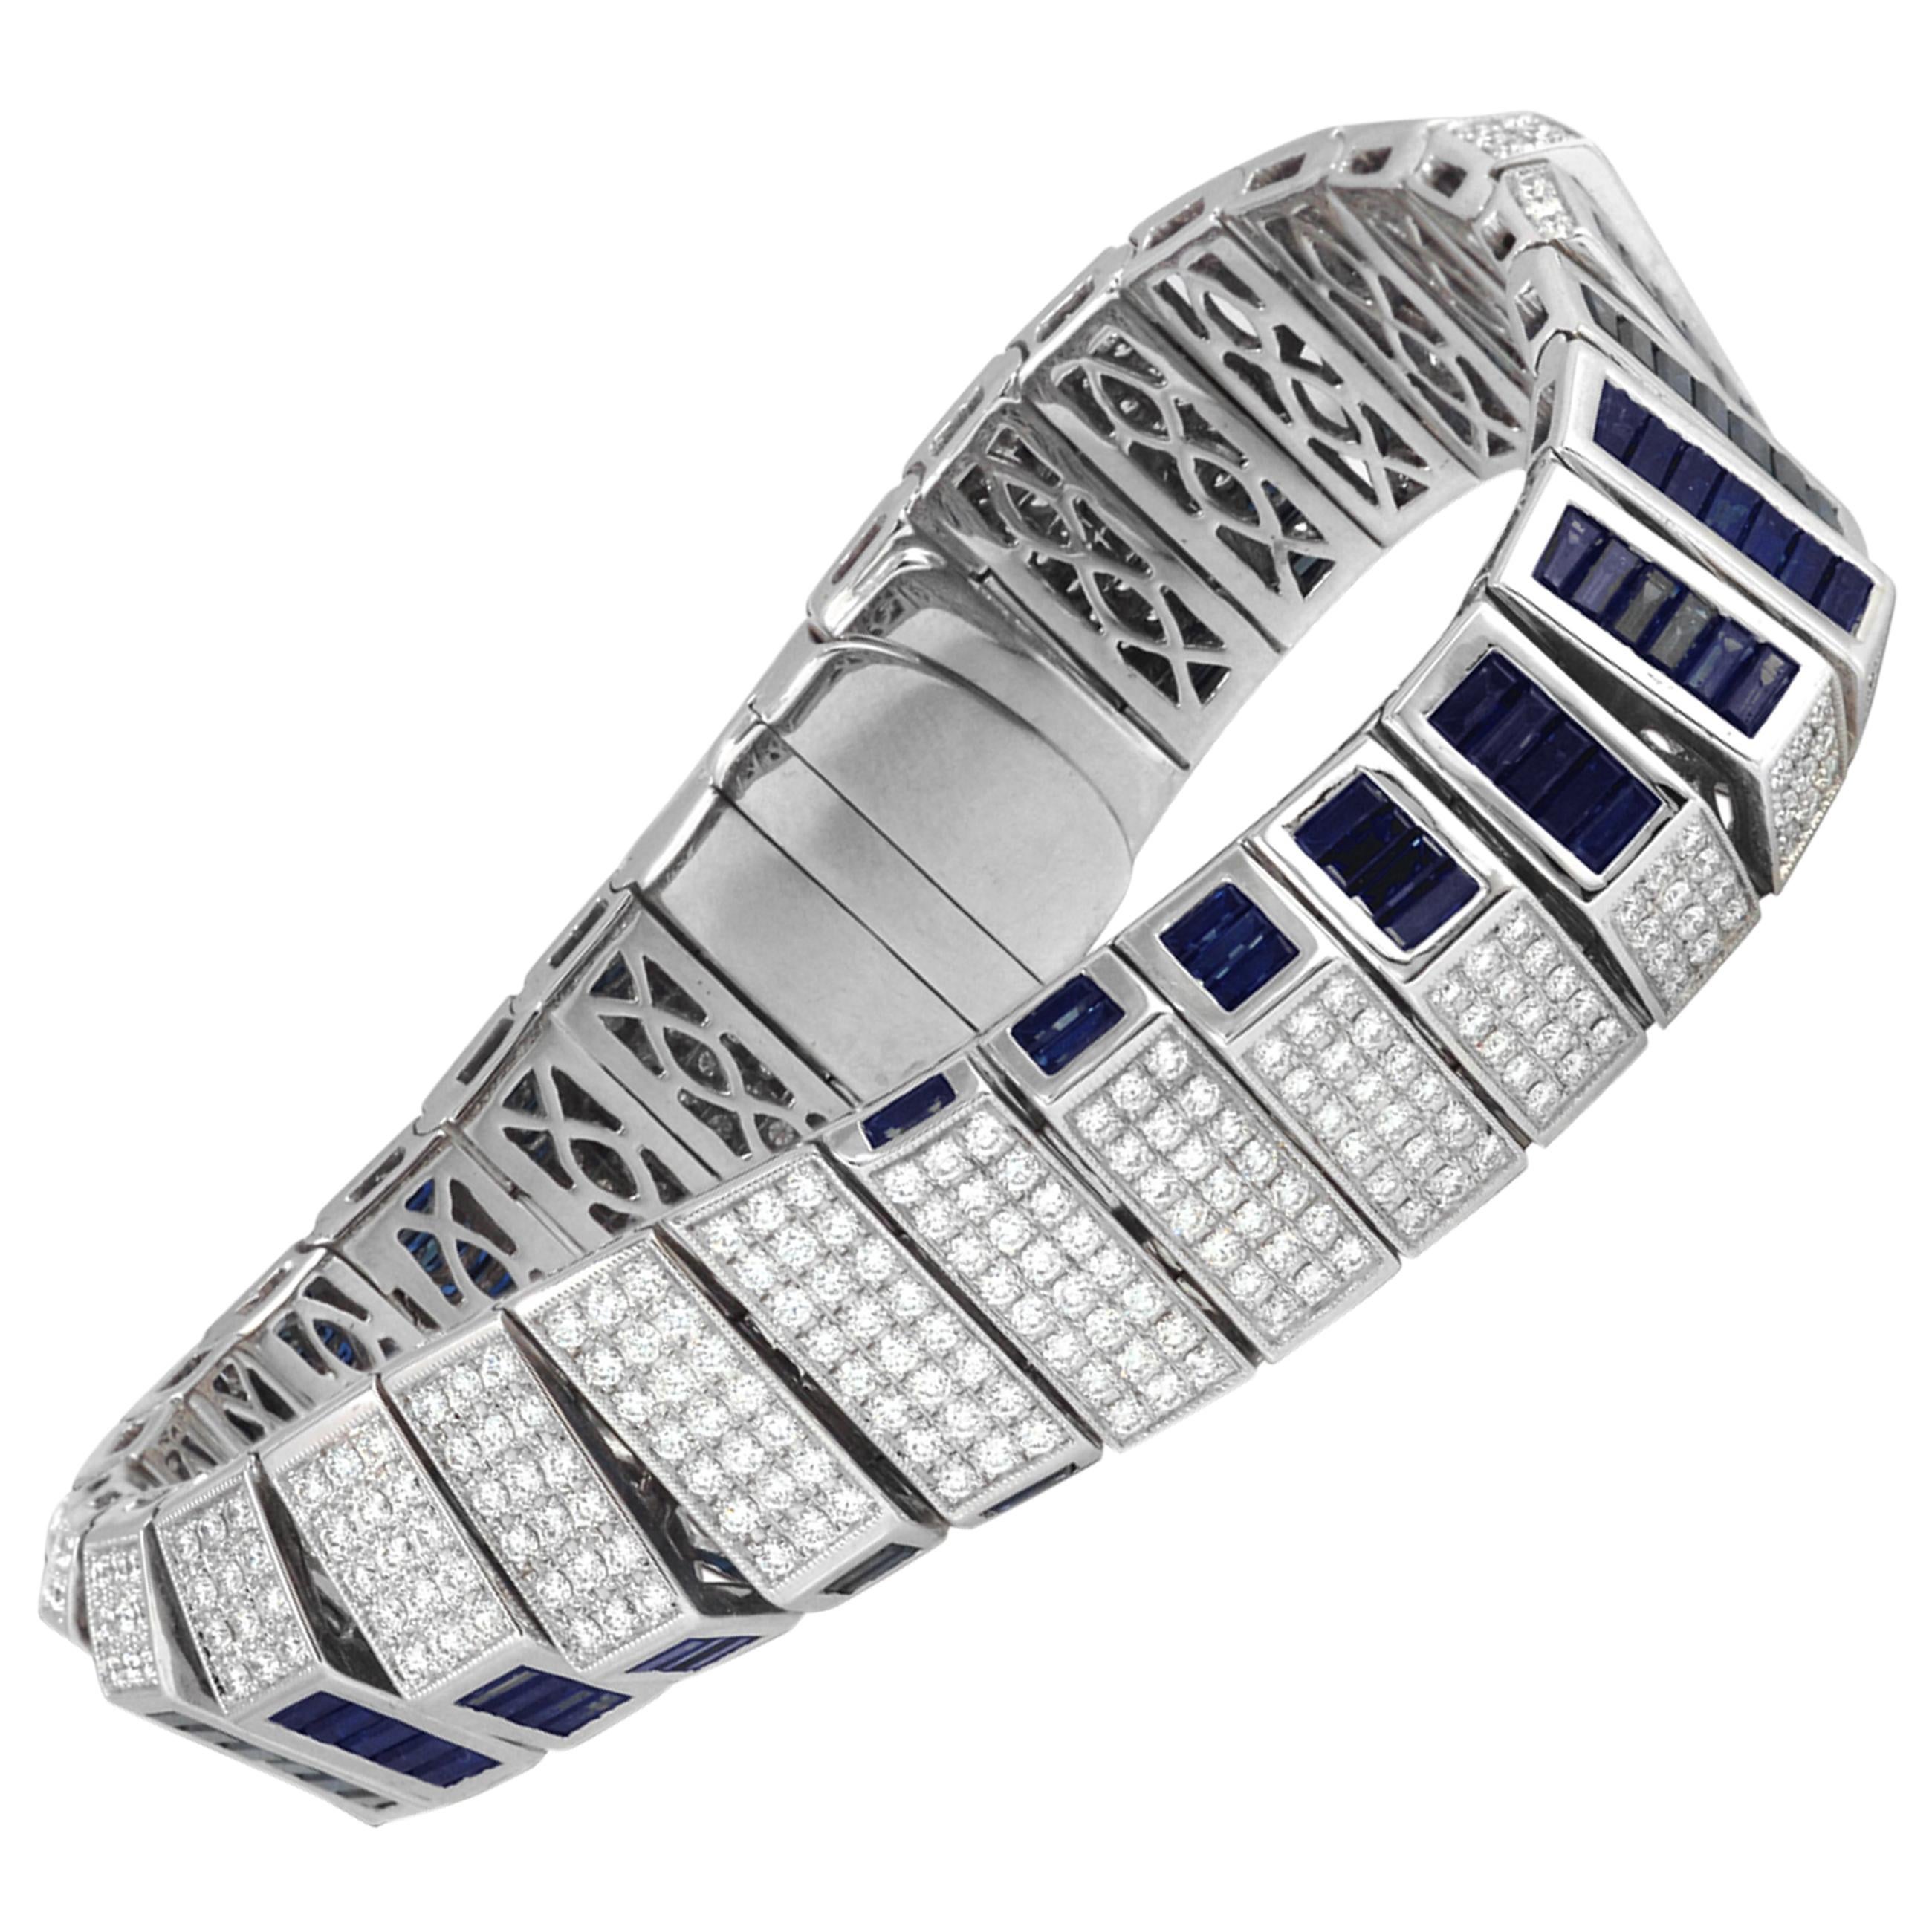 Blue Sapphire with Diamond Bracelet Set in 14 Karat White Gold Settings